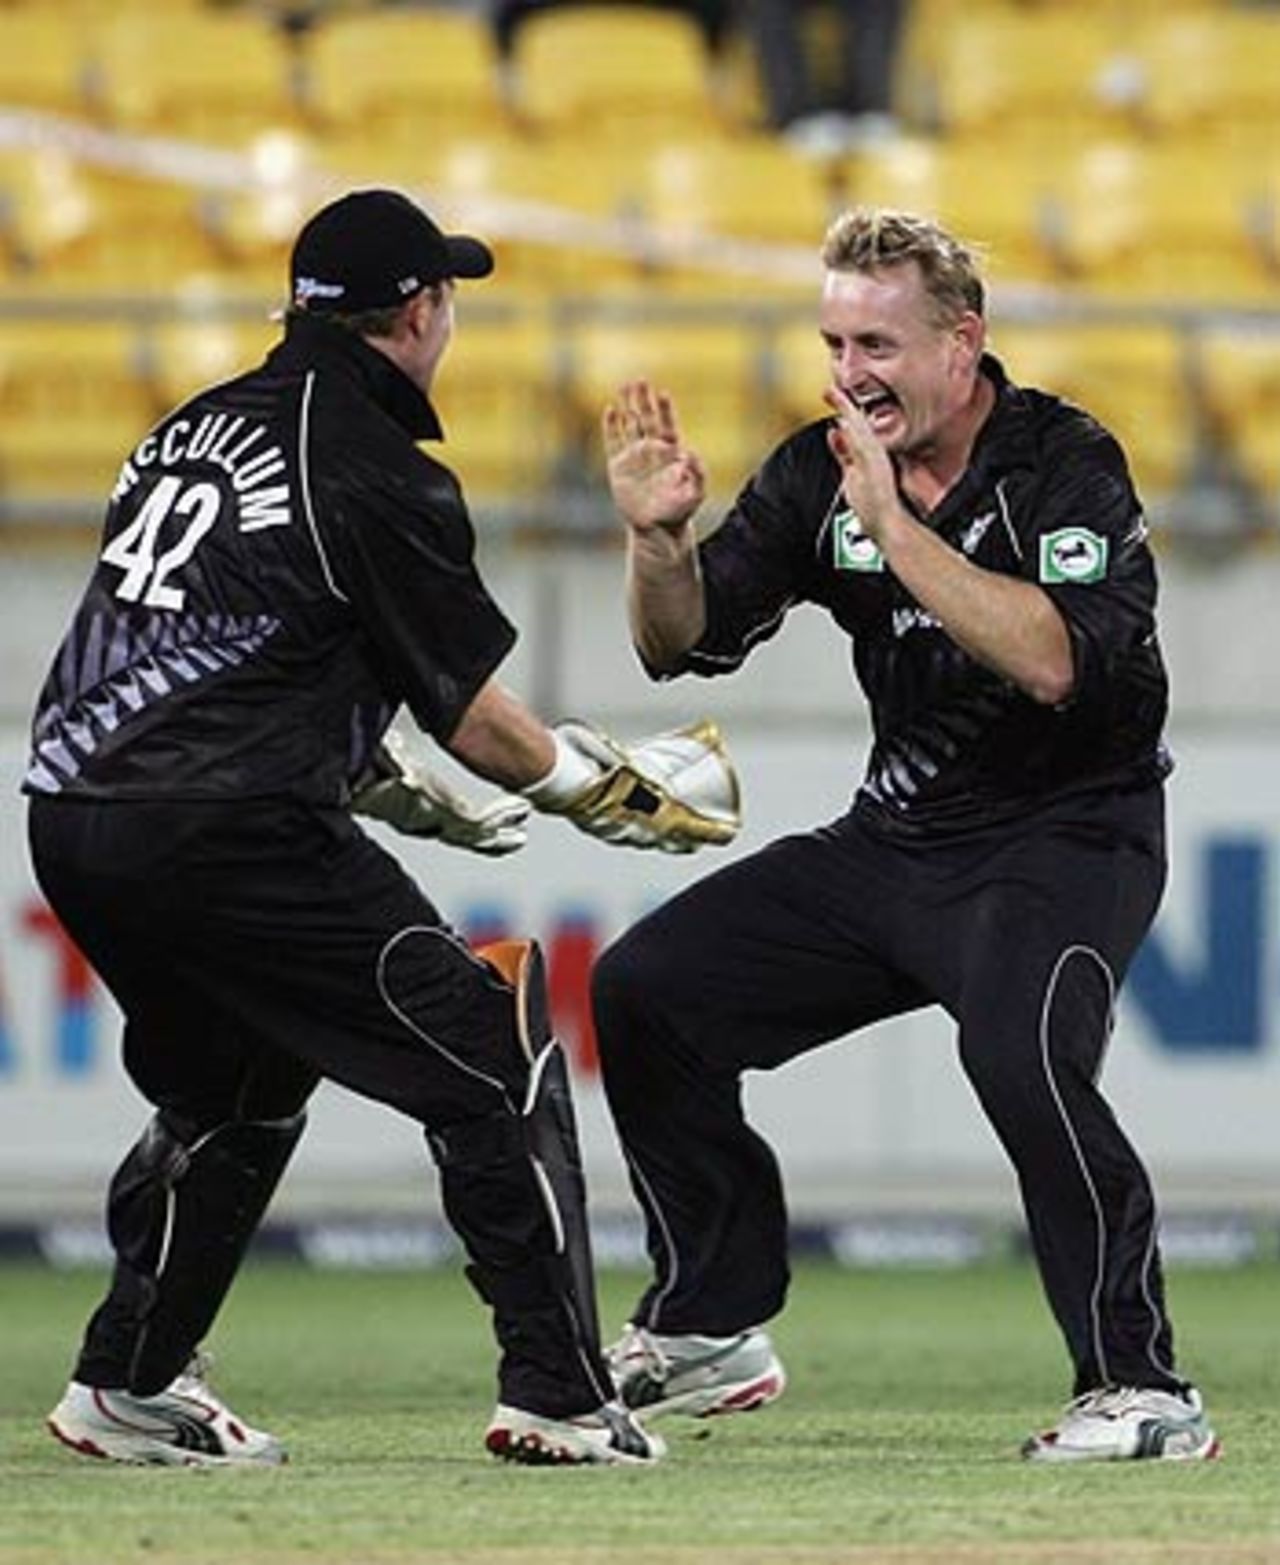 Brendon McCullum and Scott Styris celebrate the dismissal of Chaminda Vaas, Sri Lanka in New Zealand, 2005-06 